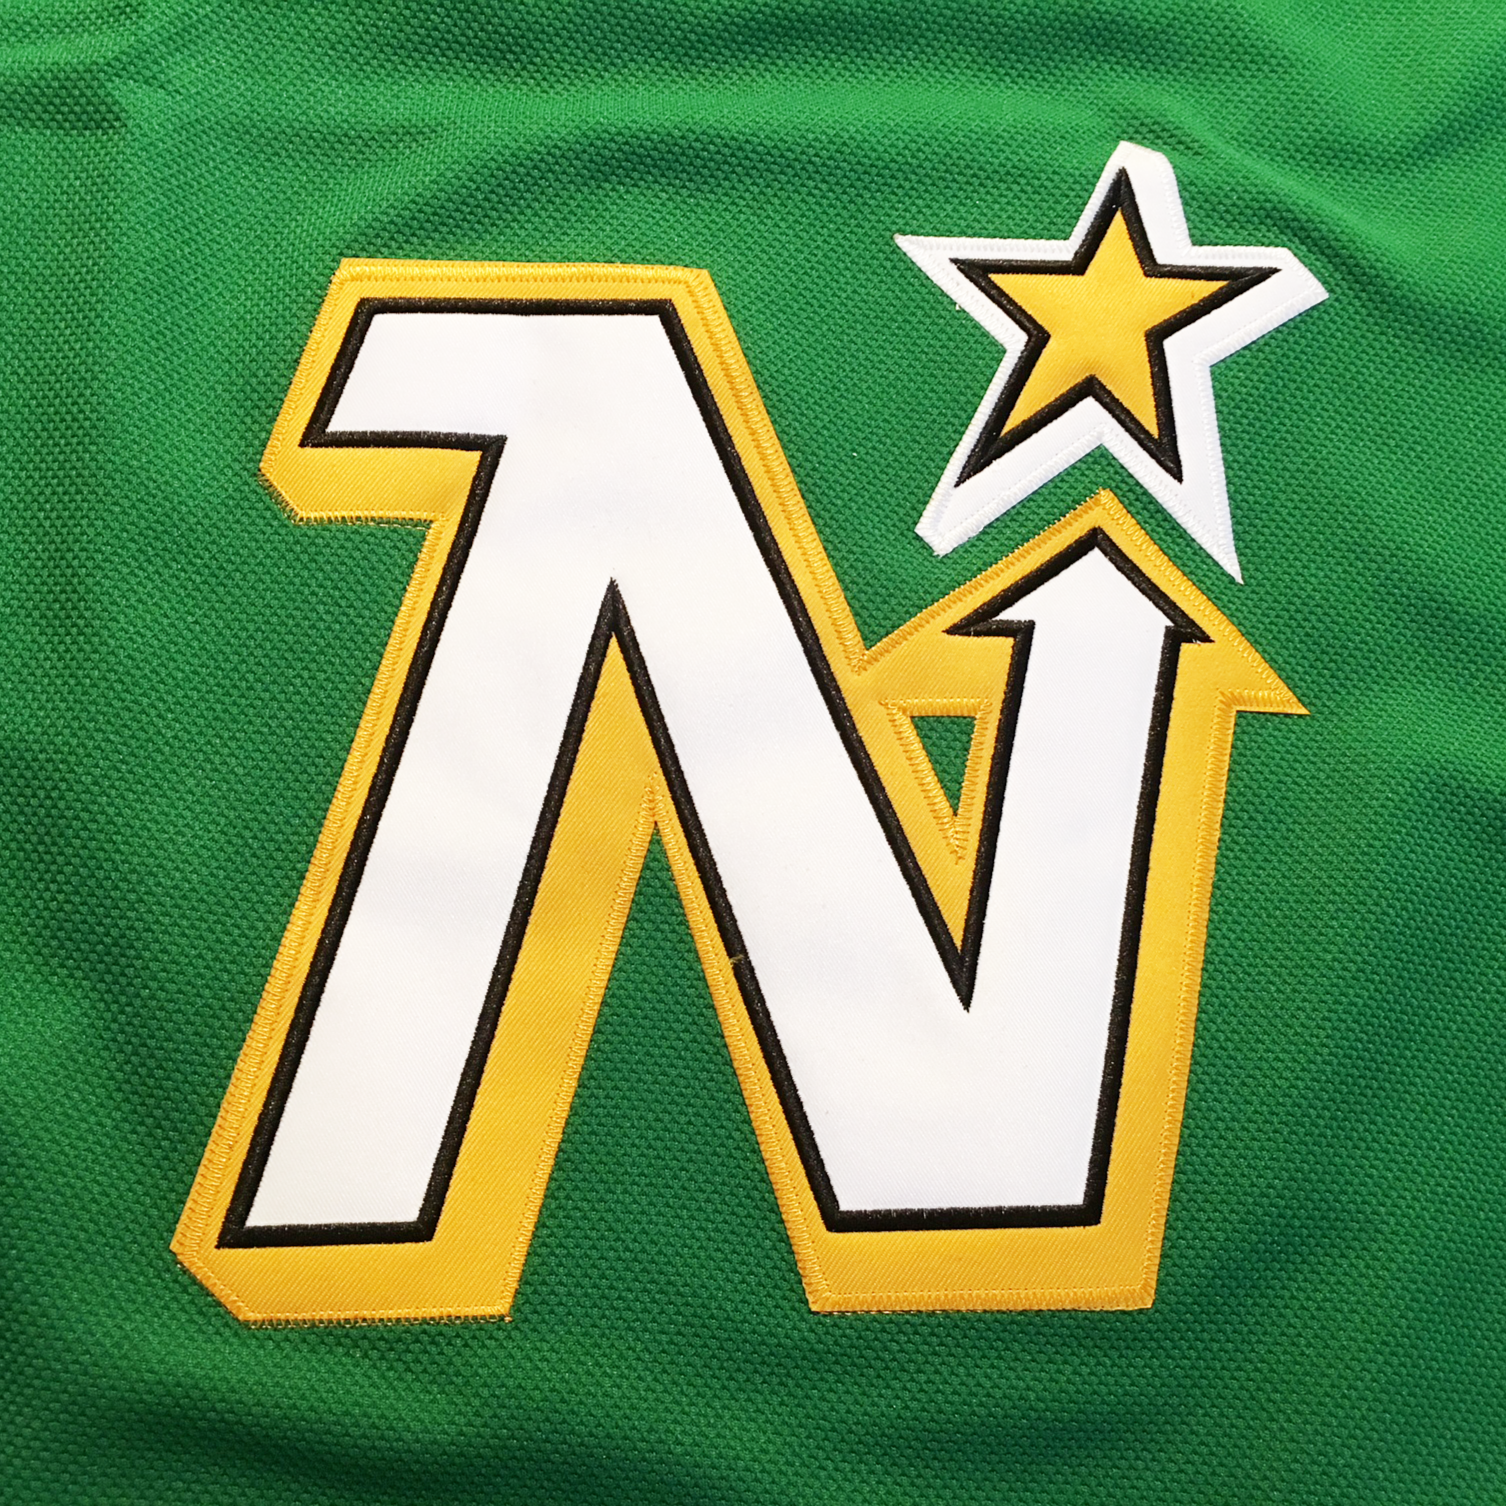 Minnesota North Stars Vintage Throwback Green Jersey